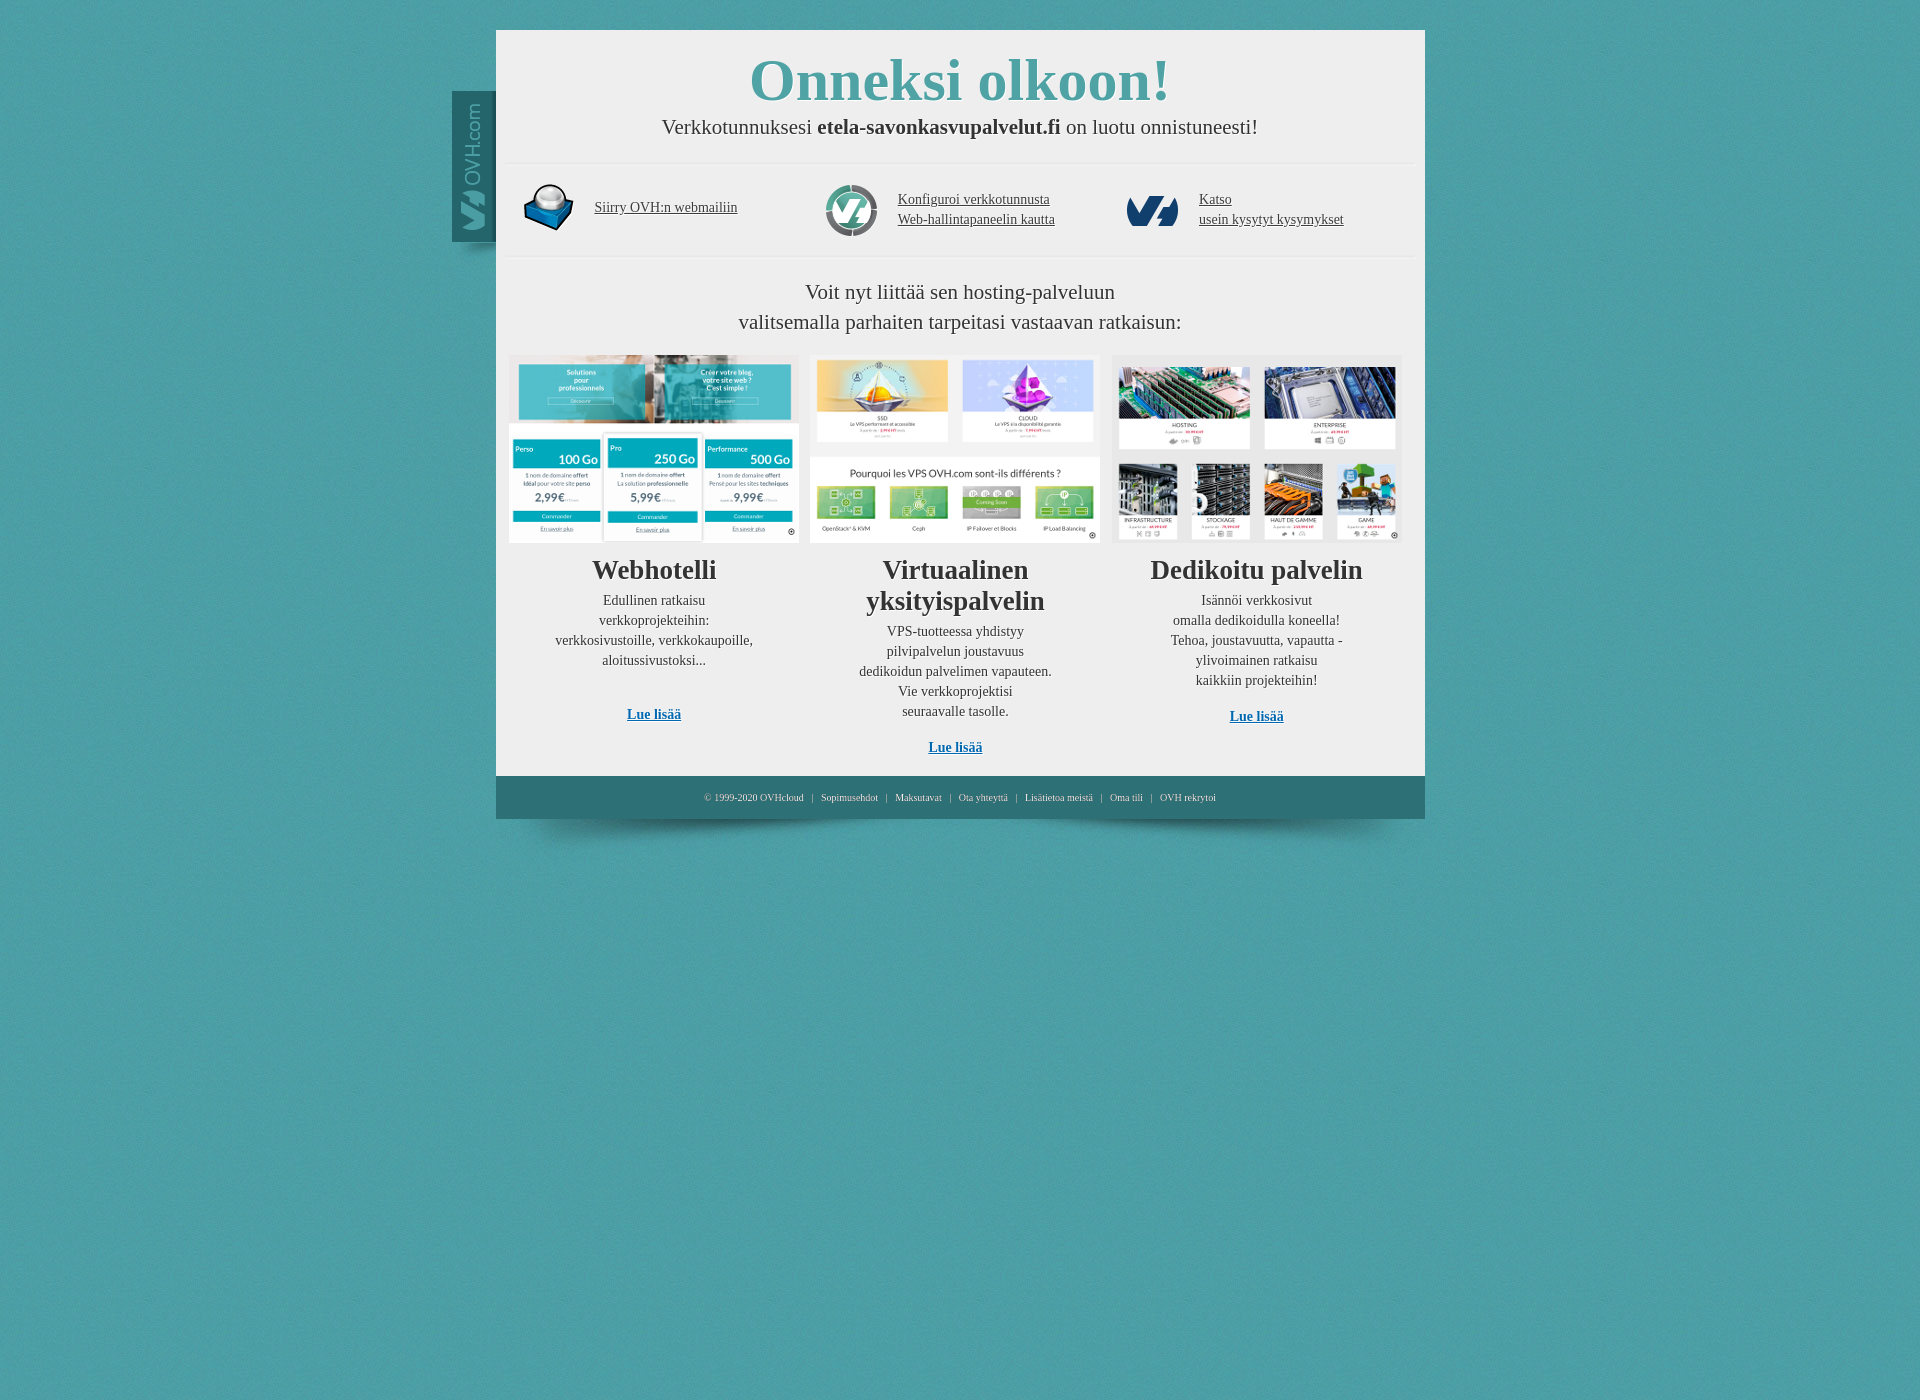 Screenshot for etela-savonkasvupalvelut.fi